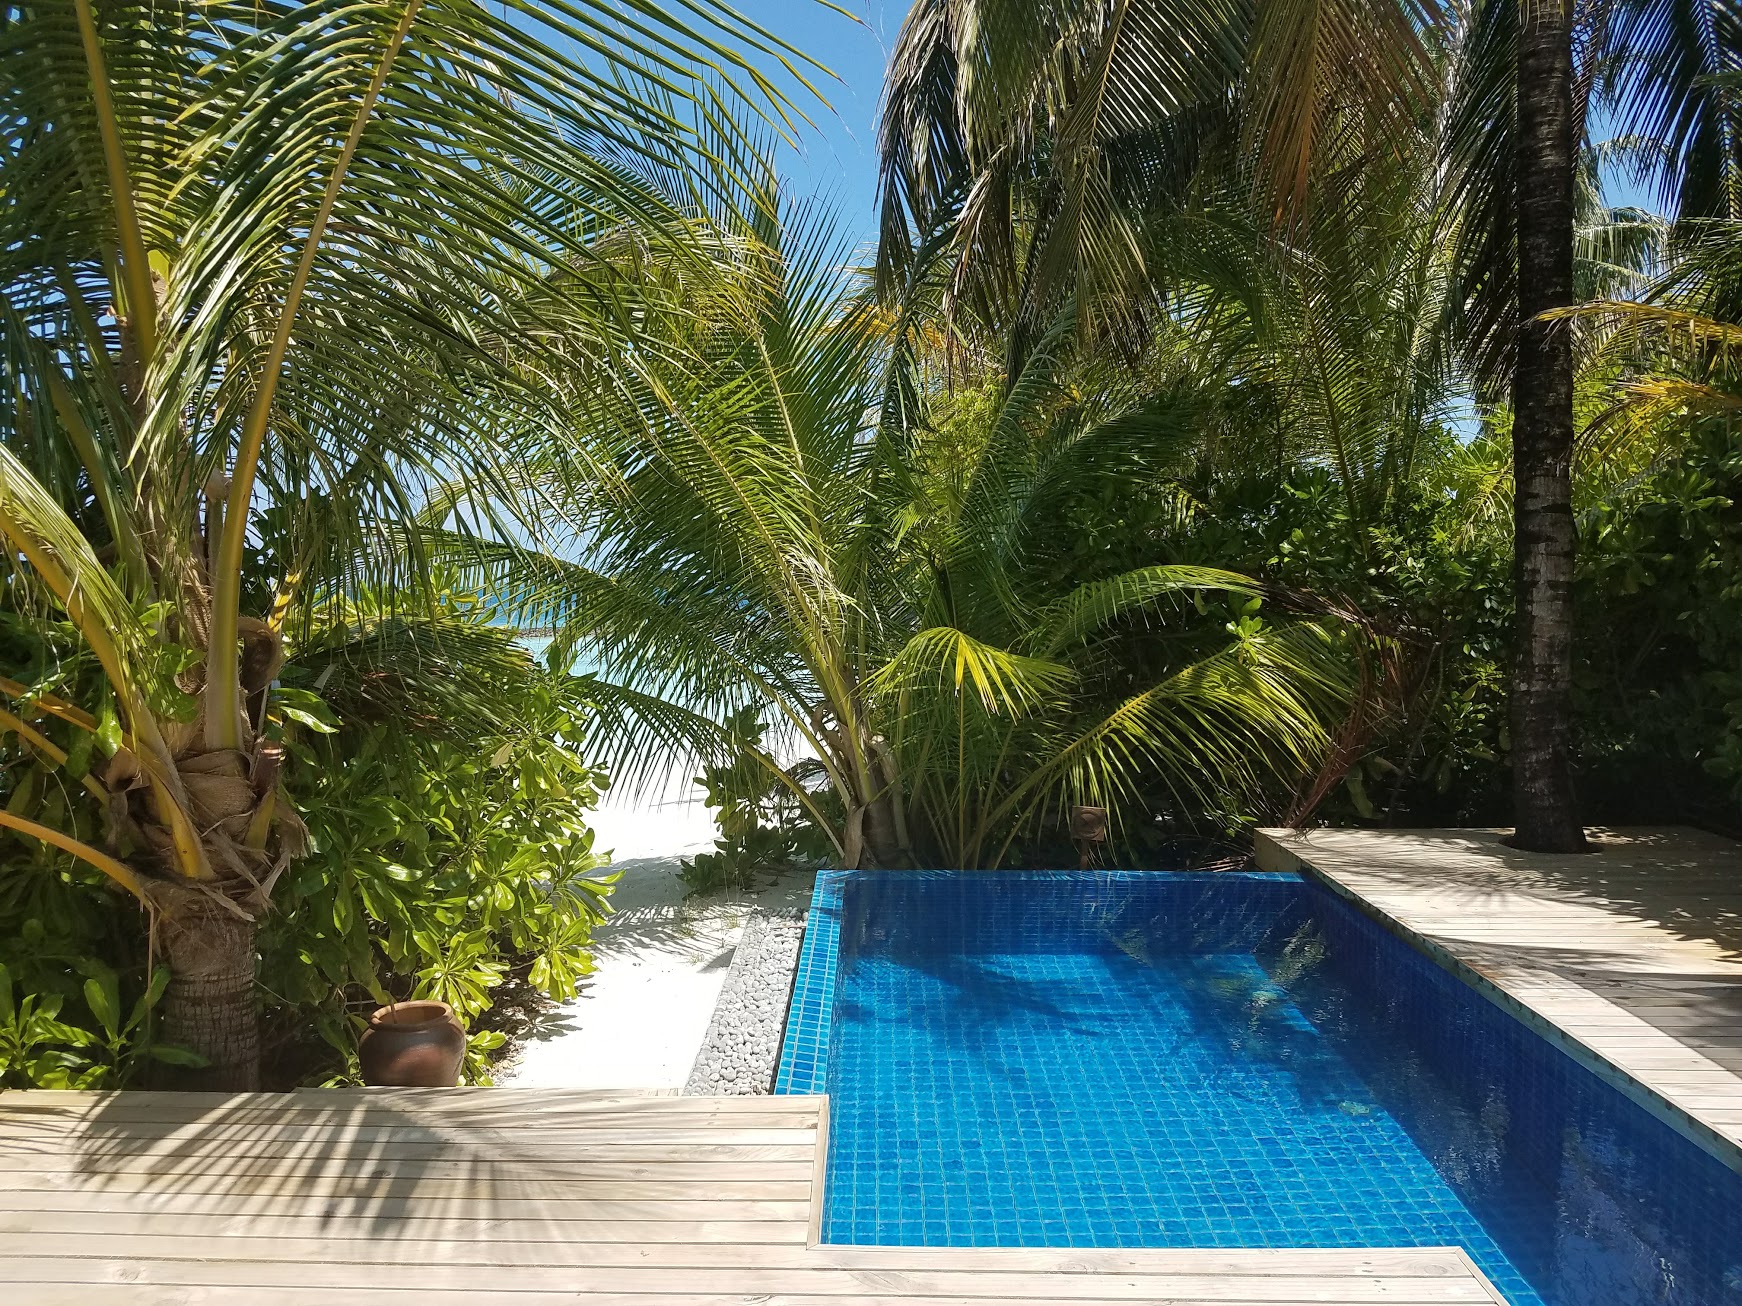 I'm at the original luxury resort in Maldives